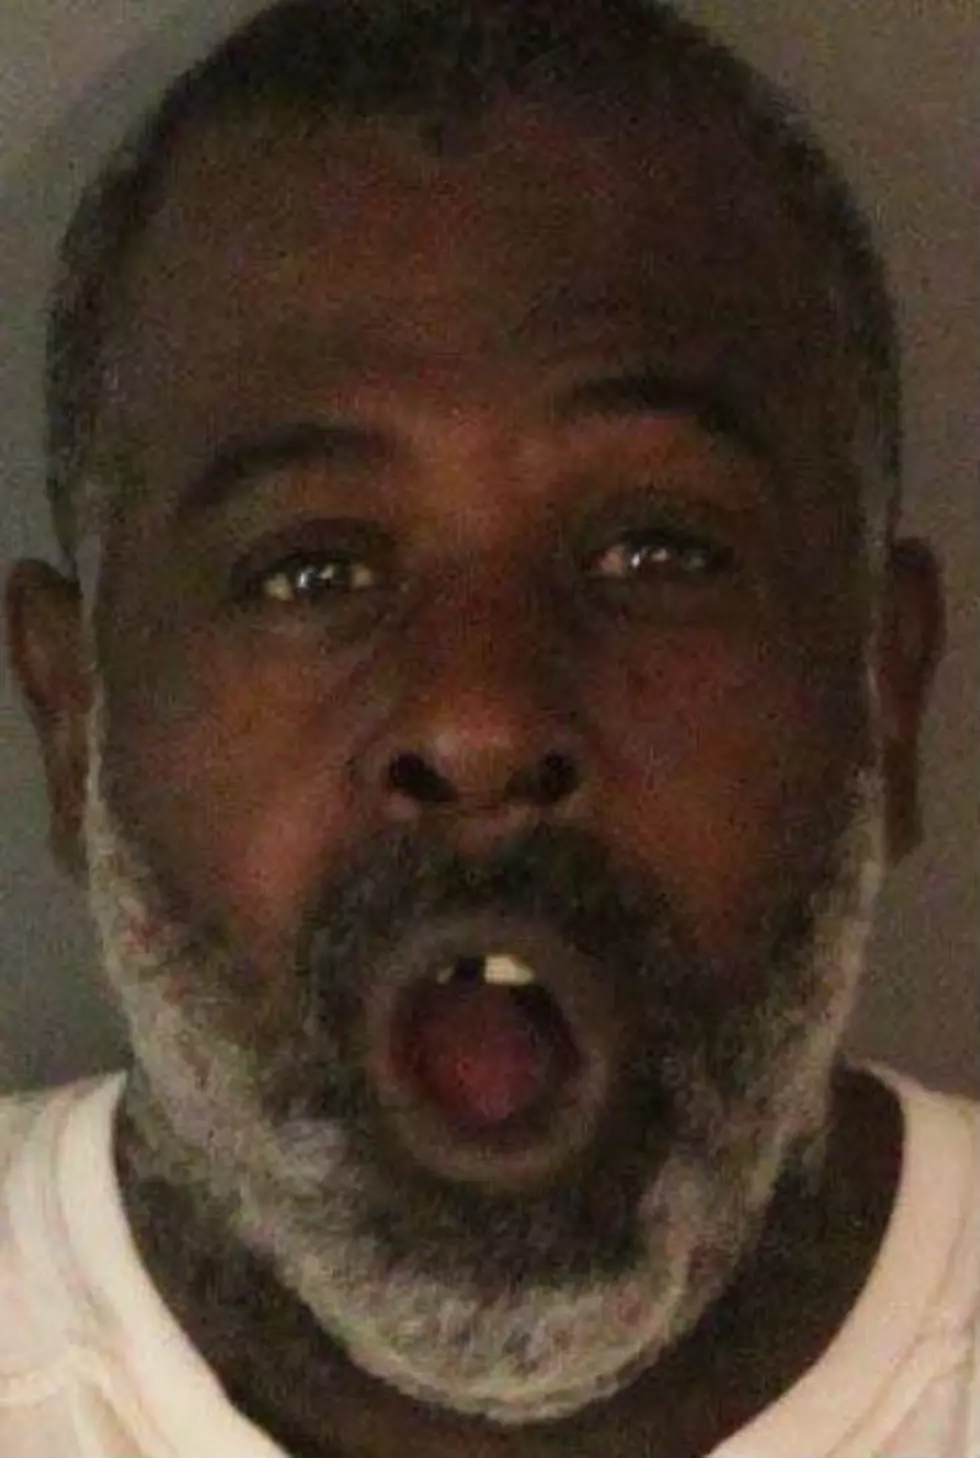 South Jersey man arrested for making criminal threats